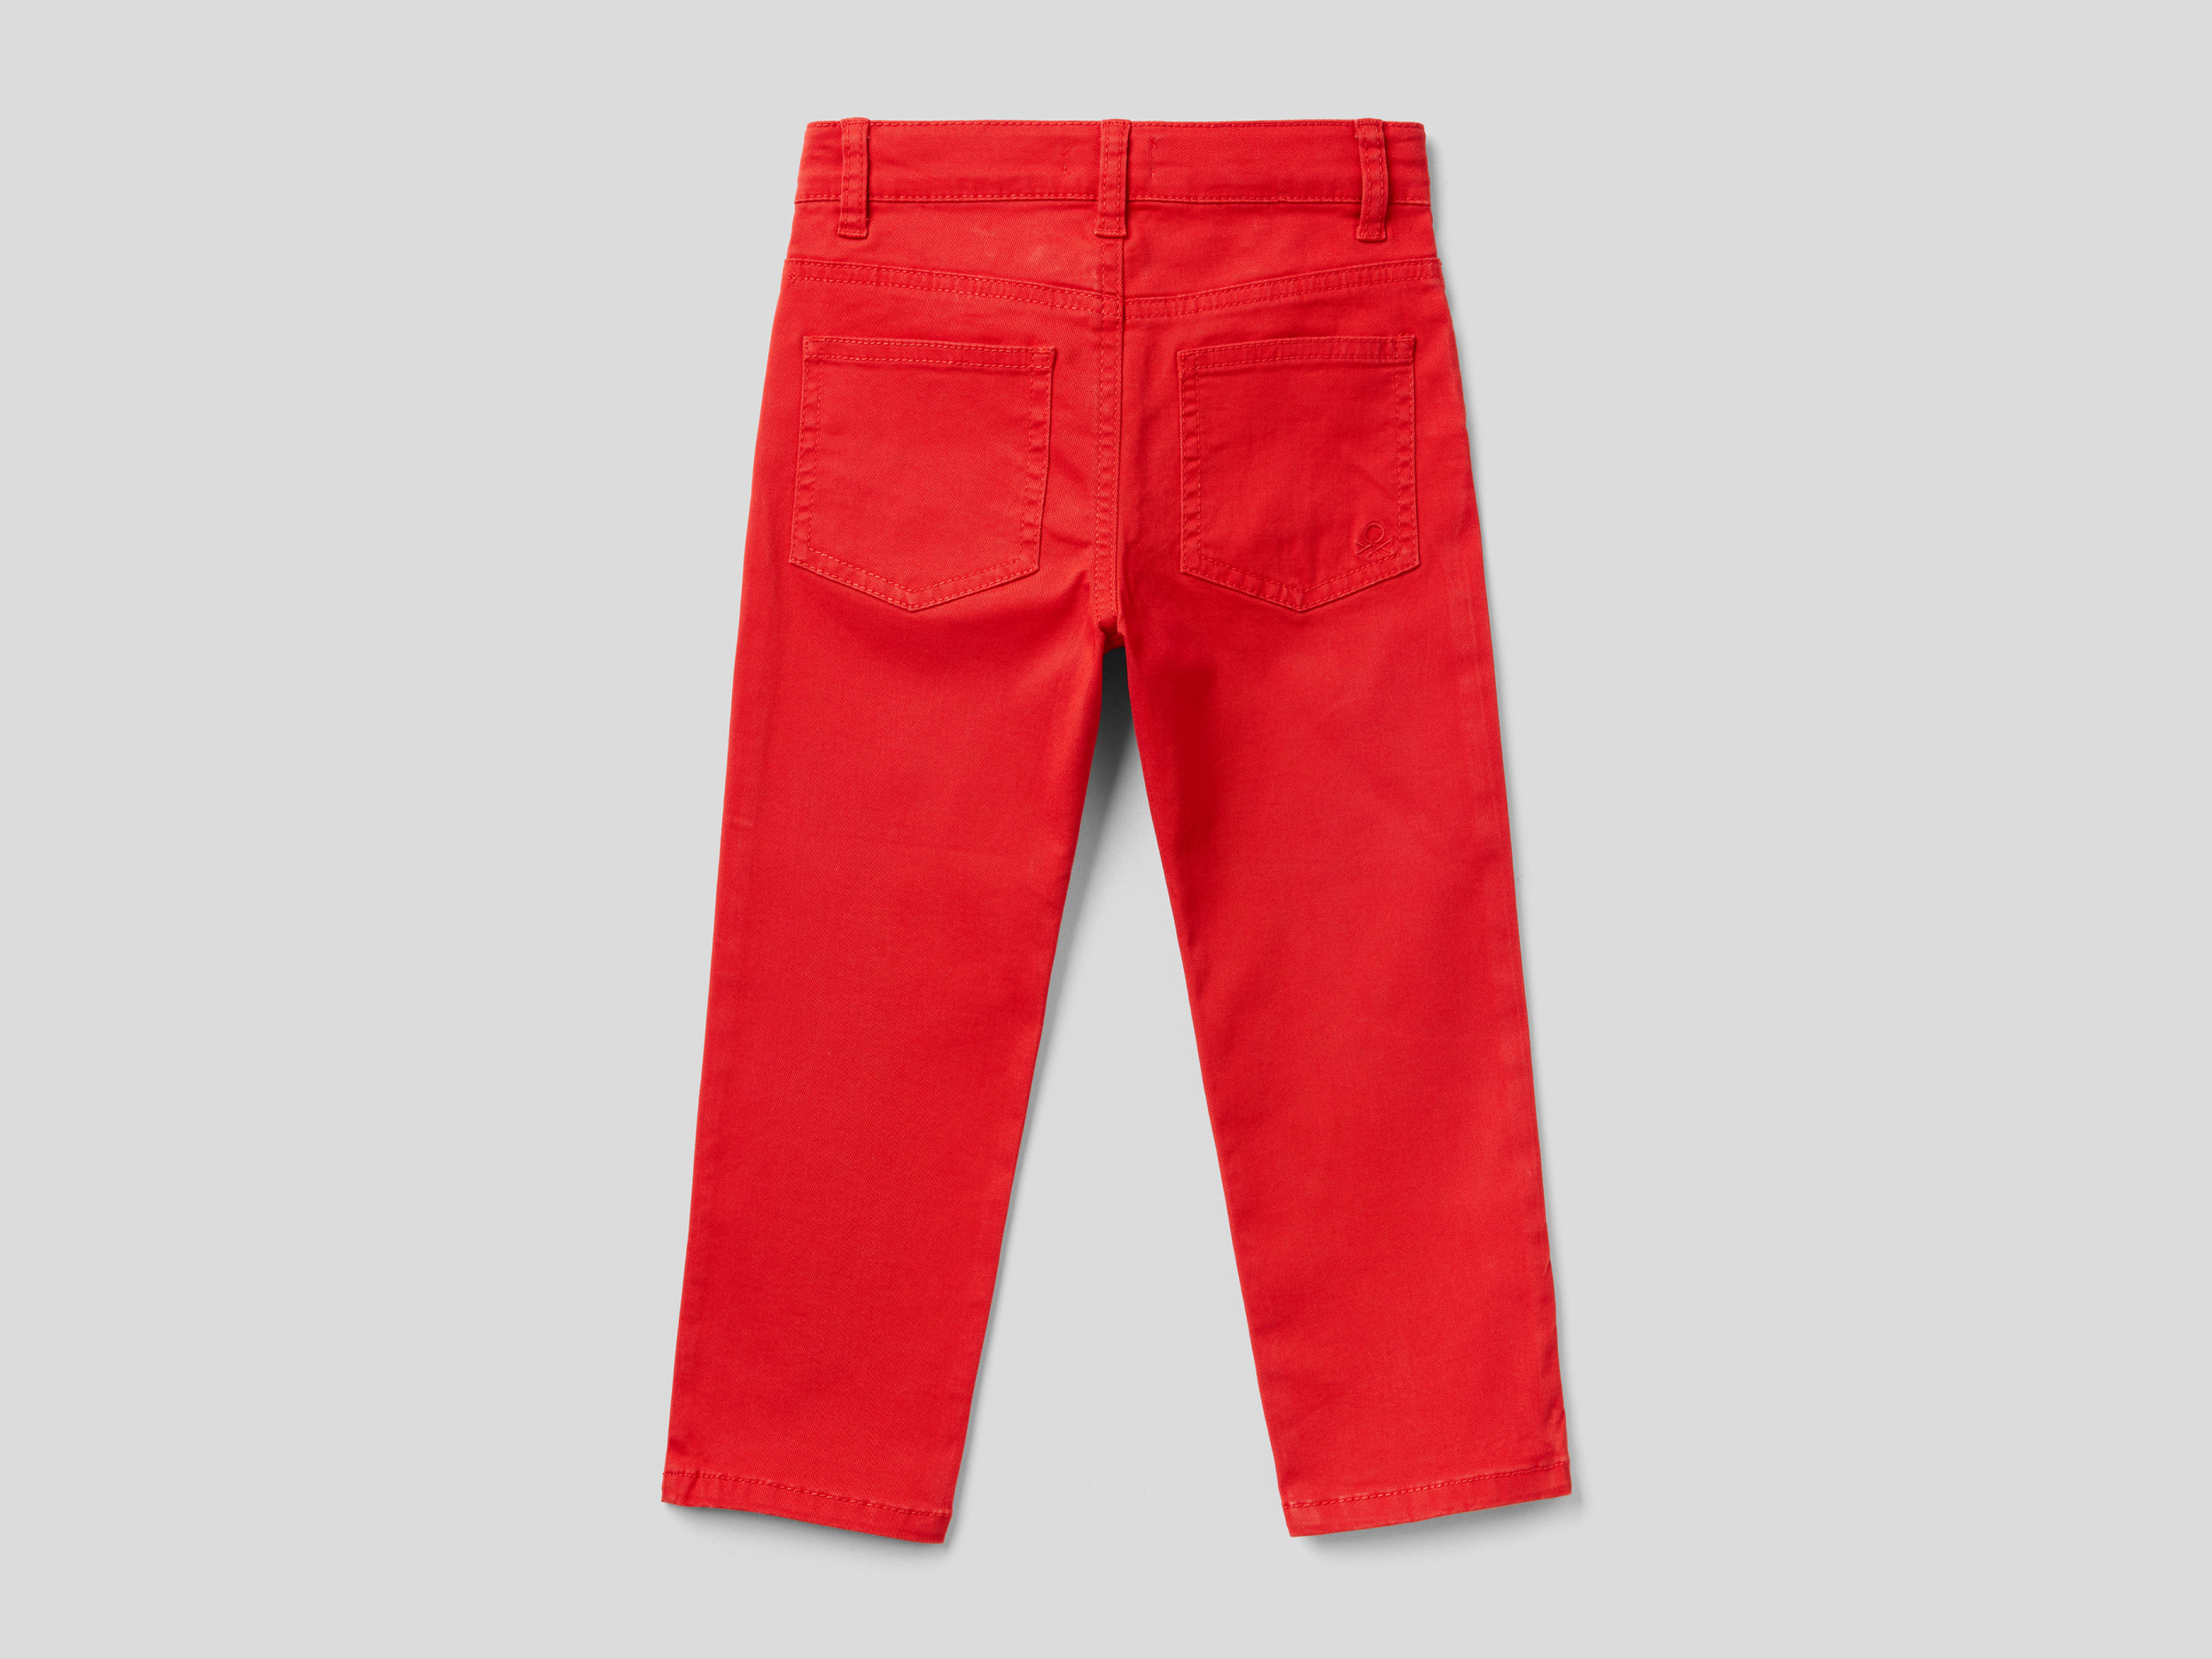 Benetton, Five-Pocket Stretch Trousers, Taglia 12-18, Red, Kids